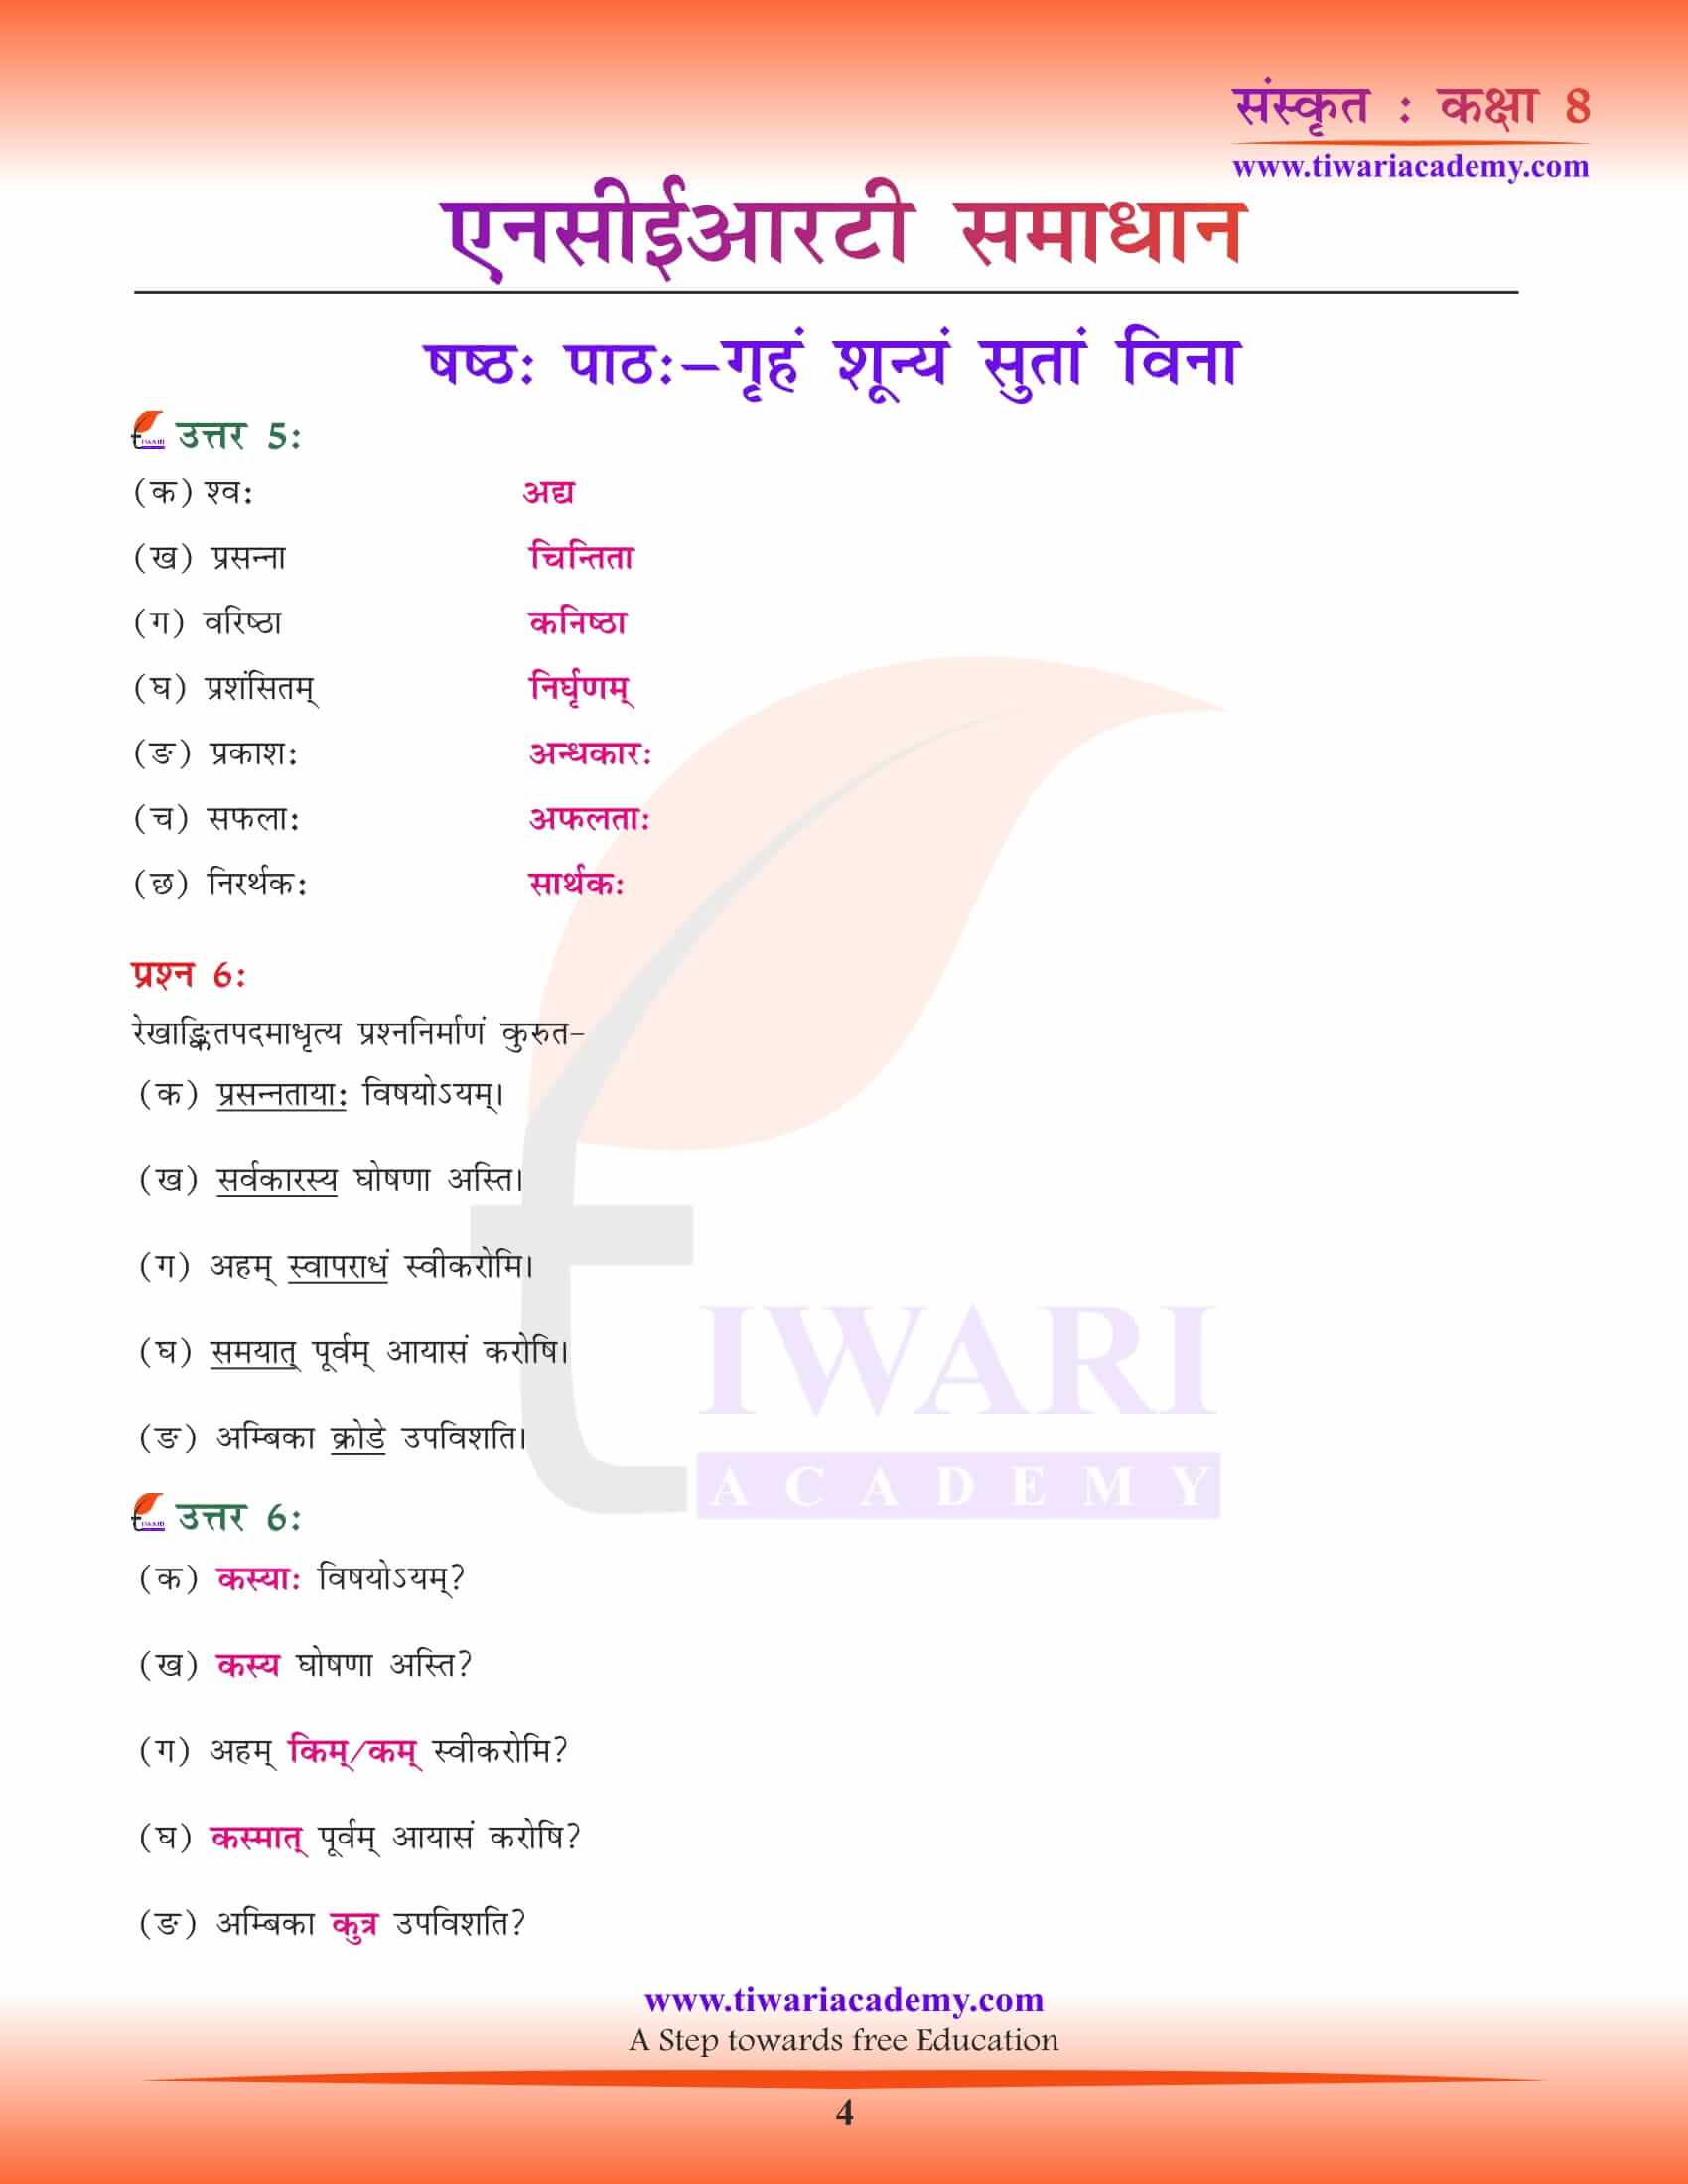 NCERT Solutions for Class 8 Sanskrit Chapter 6 in Hindi